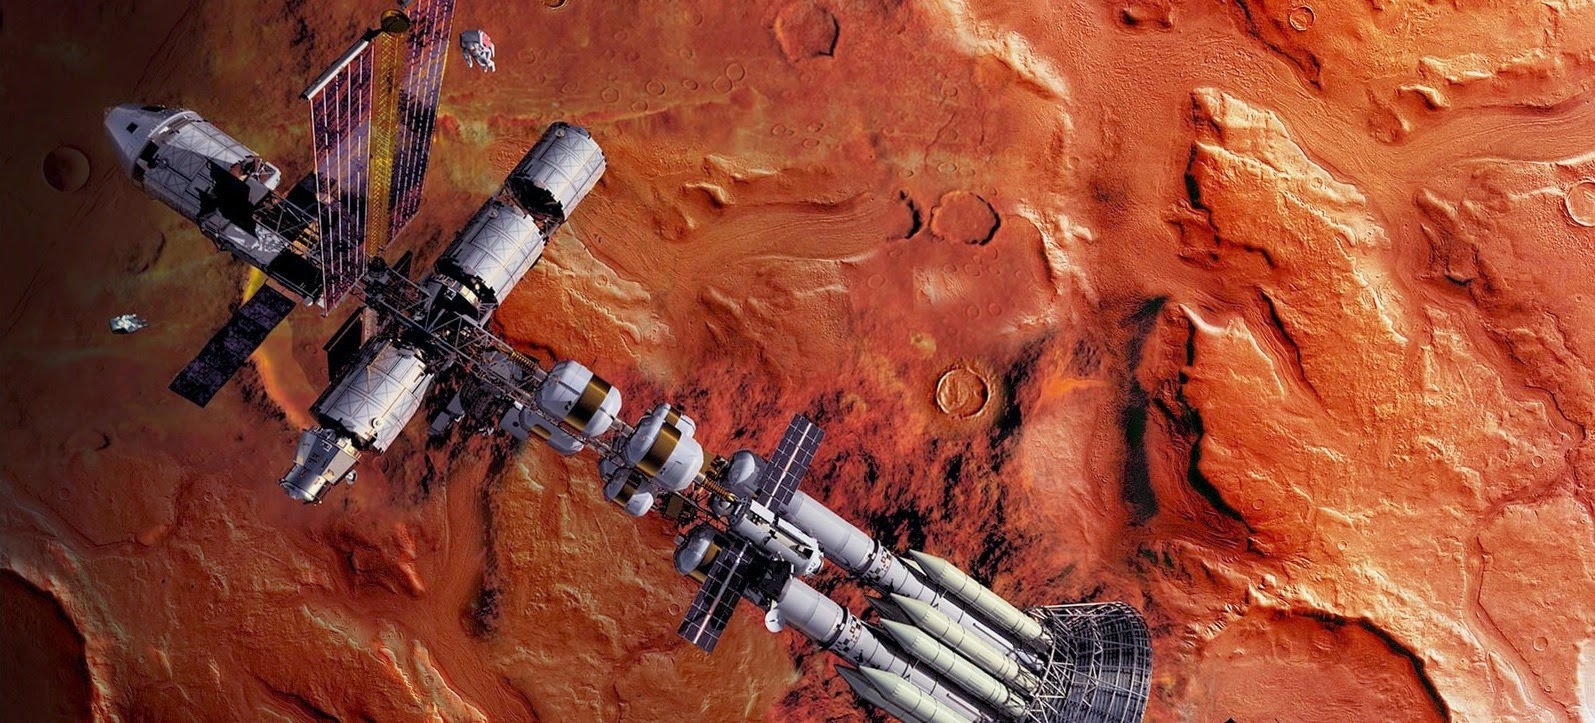 Spaceship in Mars orbit